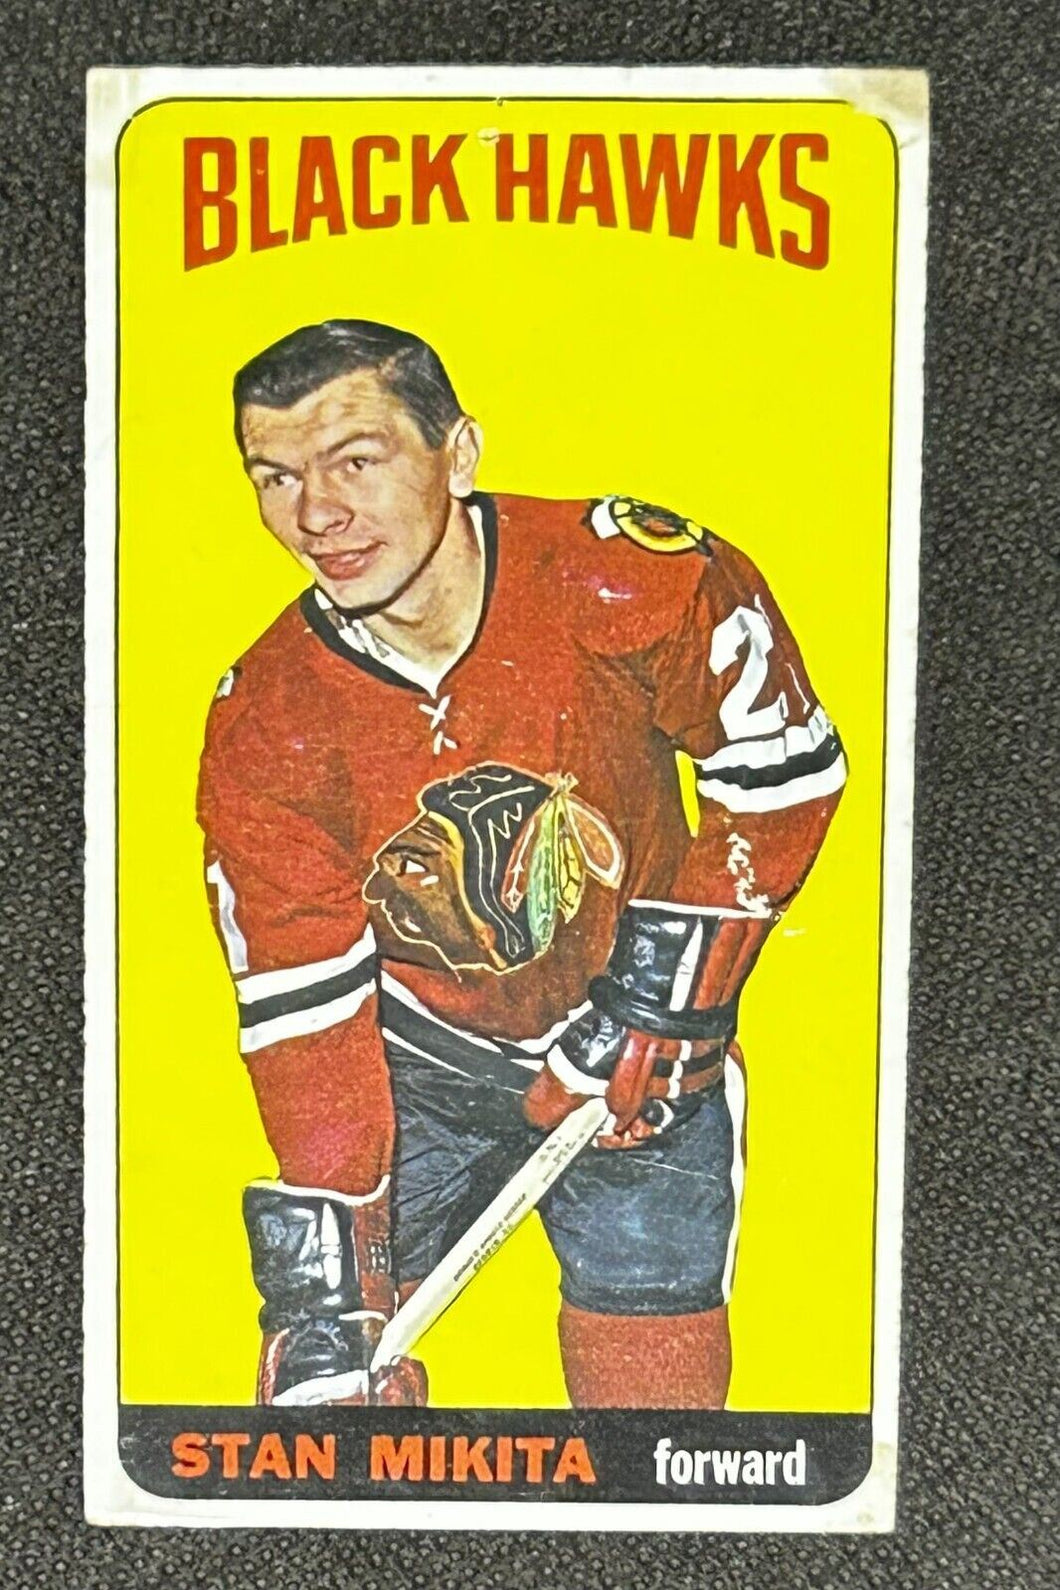 1964 Topps Hockey Card Stan Mikita #31, Tall Boy VG+ condition